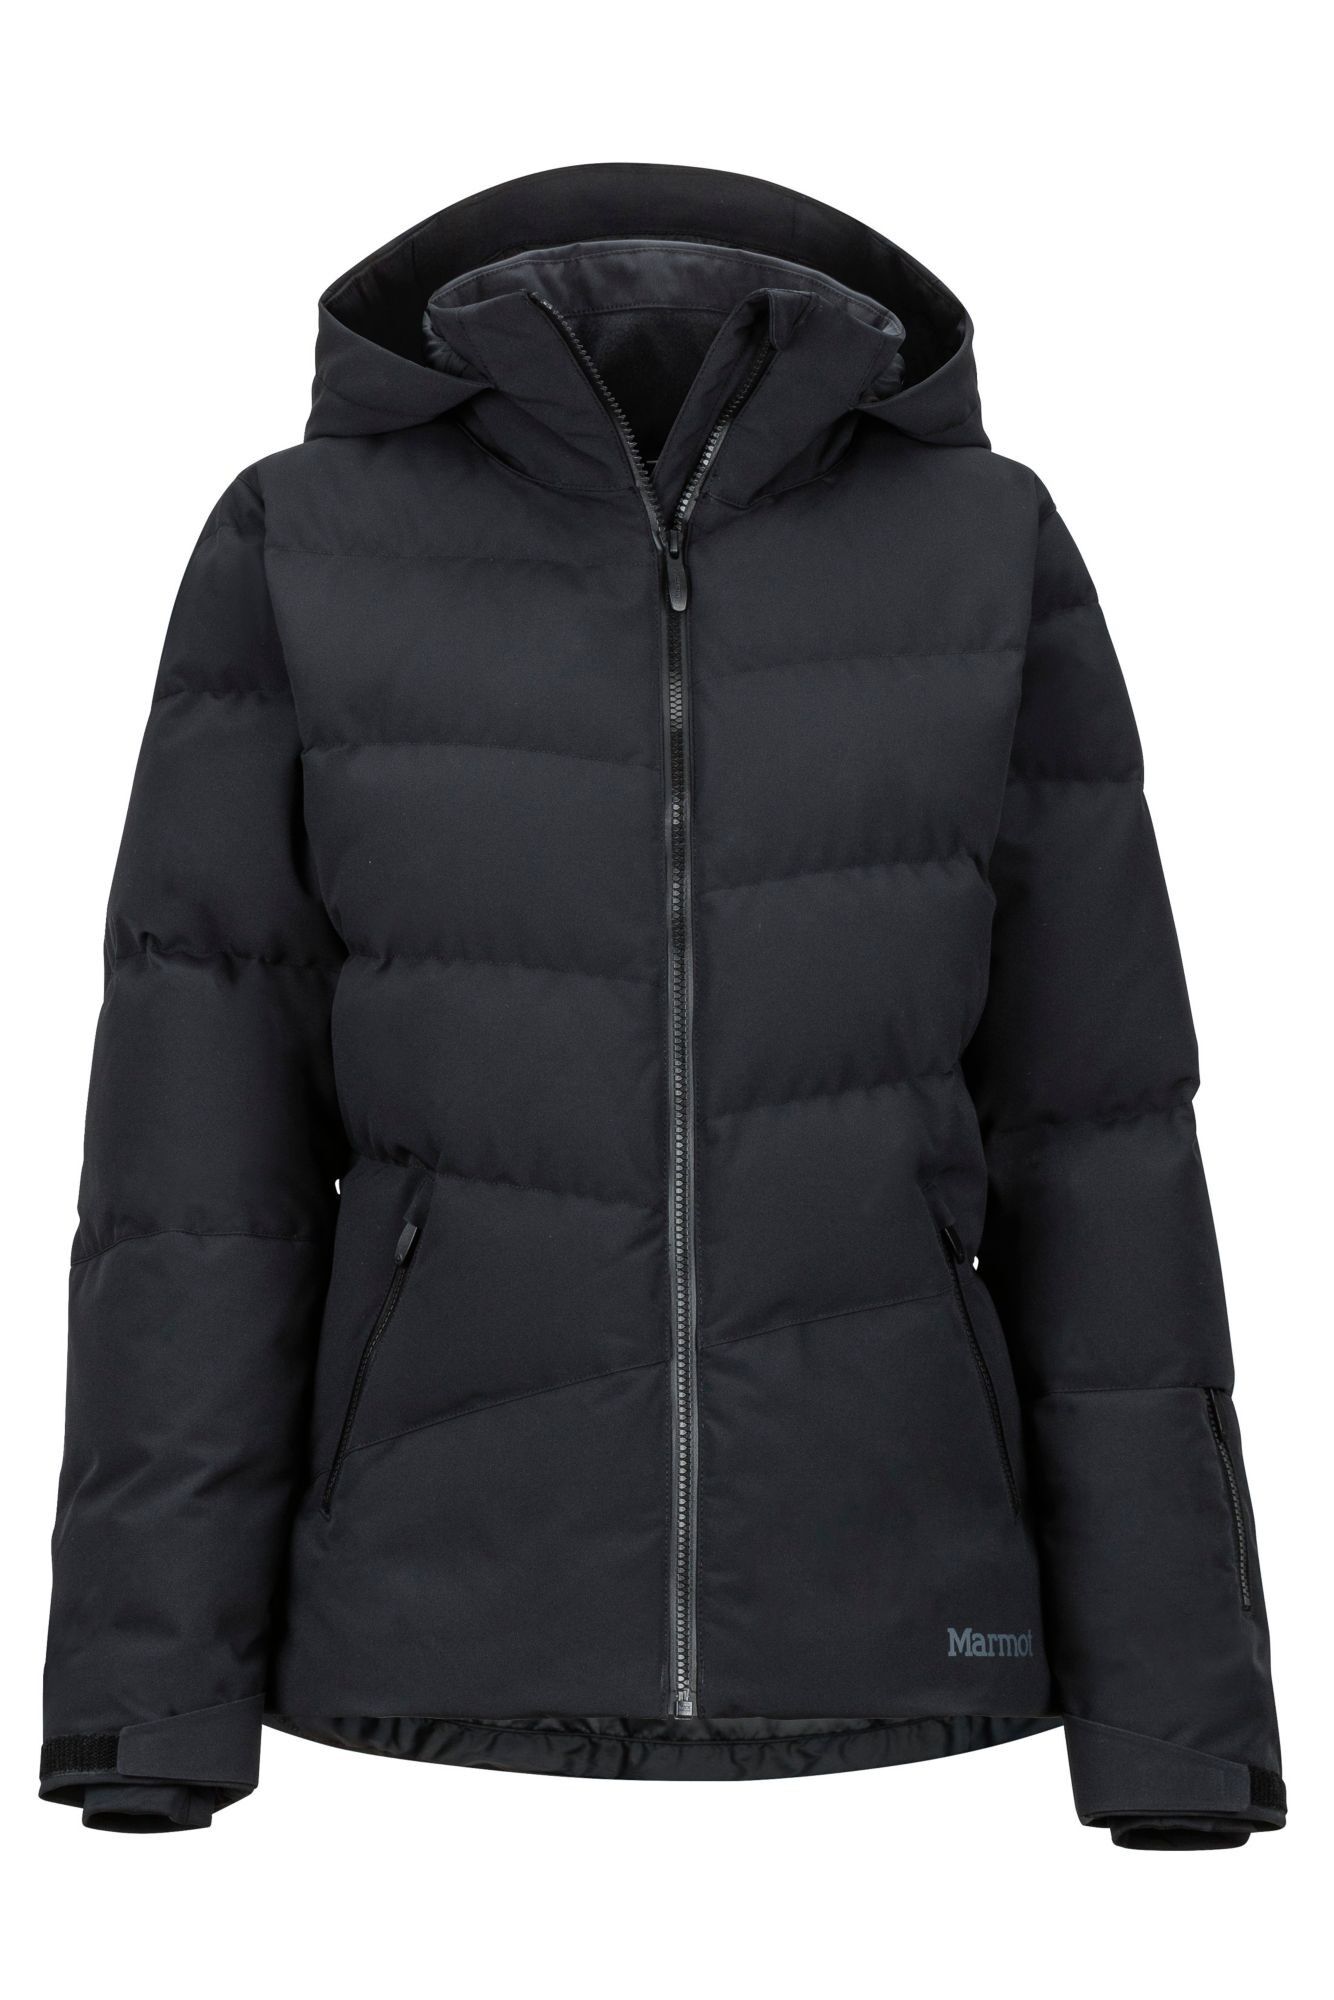 Marmot Slingshot Jacket - Laskettelutakki - Naiset